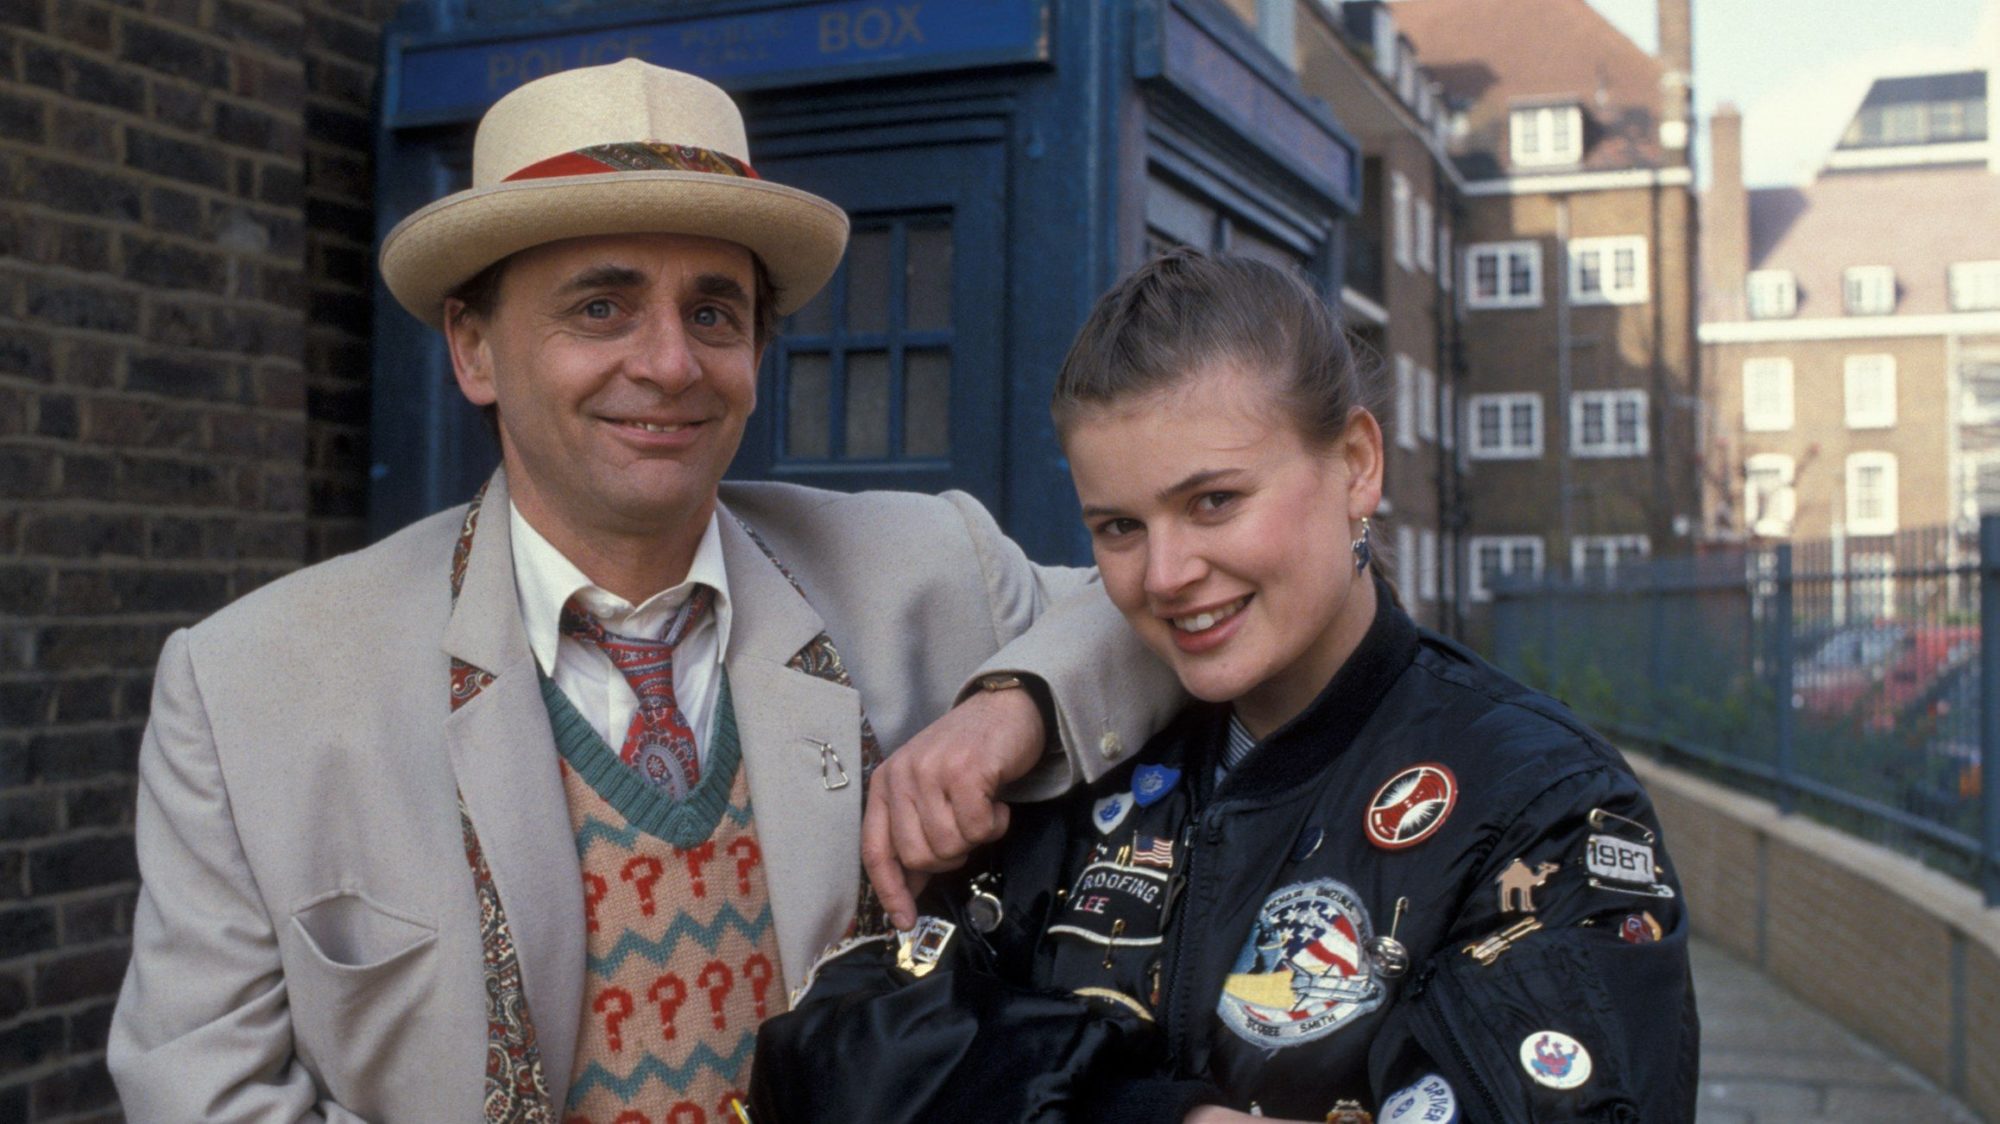 doctor who companions